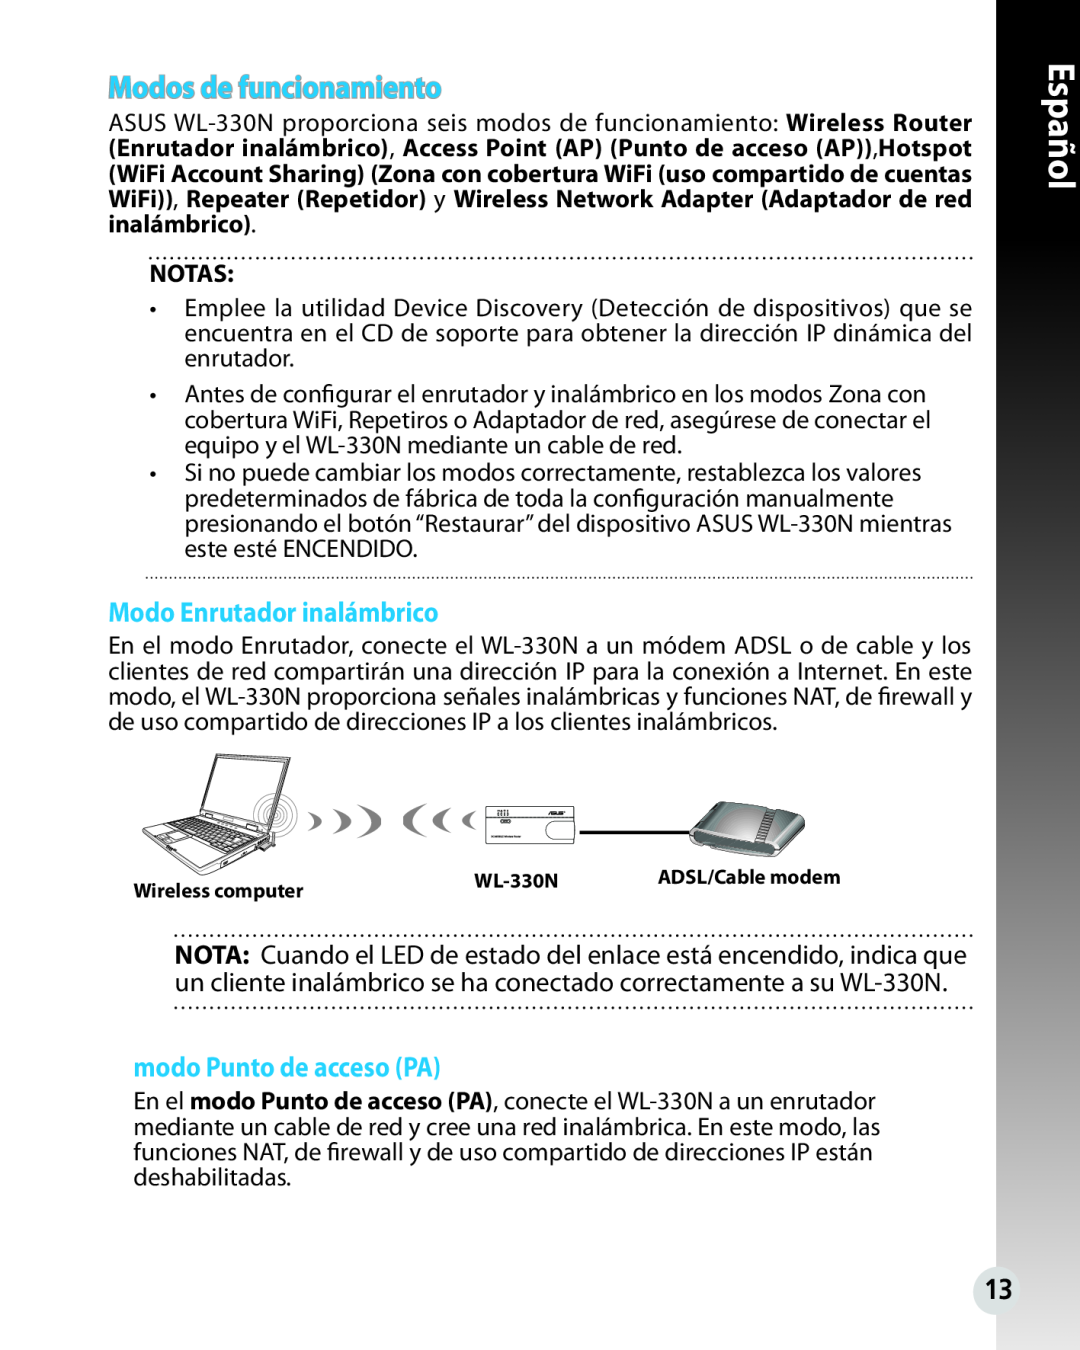 Asus WL330N quick start Modos de funcionamiento, Modo Enrutador inalámbrico, modo Punto de acceso PA, Español 